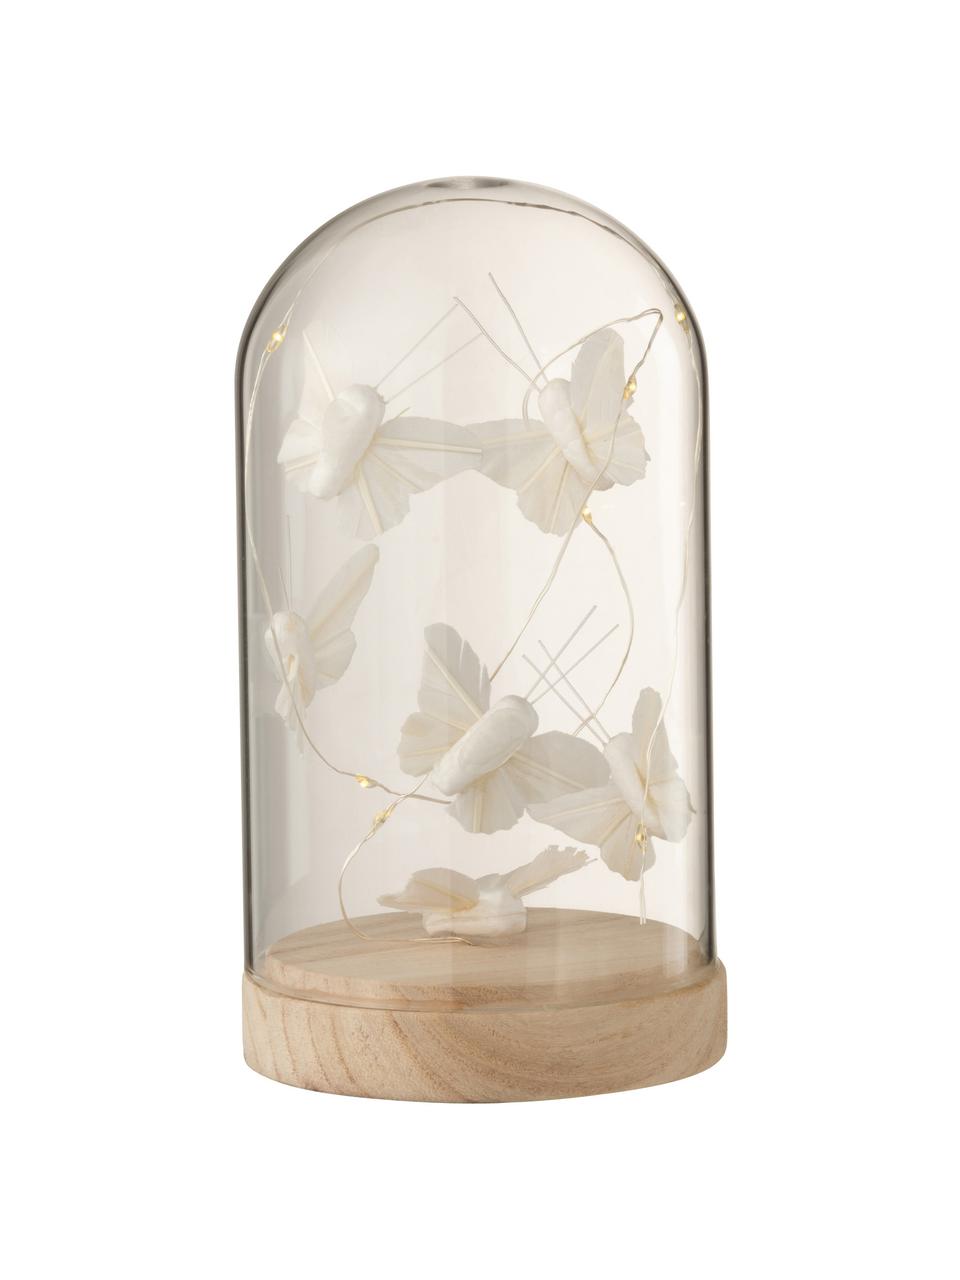 Deko-Objekte LED Bell, Glas, Holz, Weiß, Ø 9 x H 17 cm